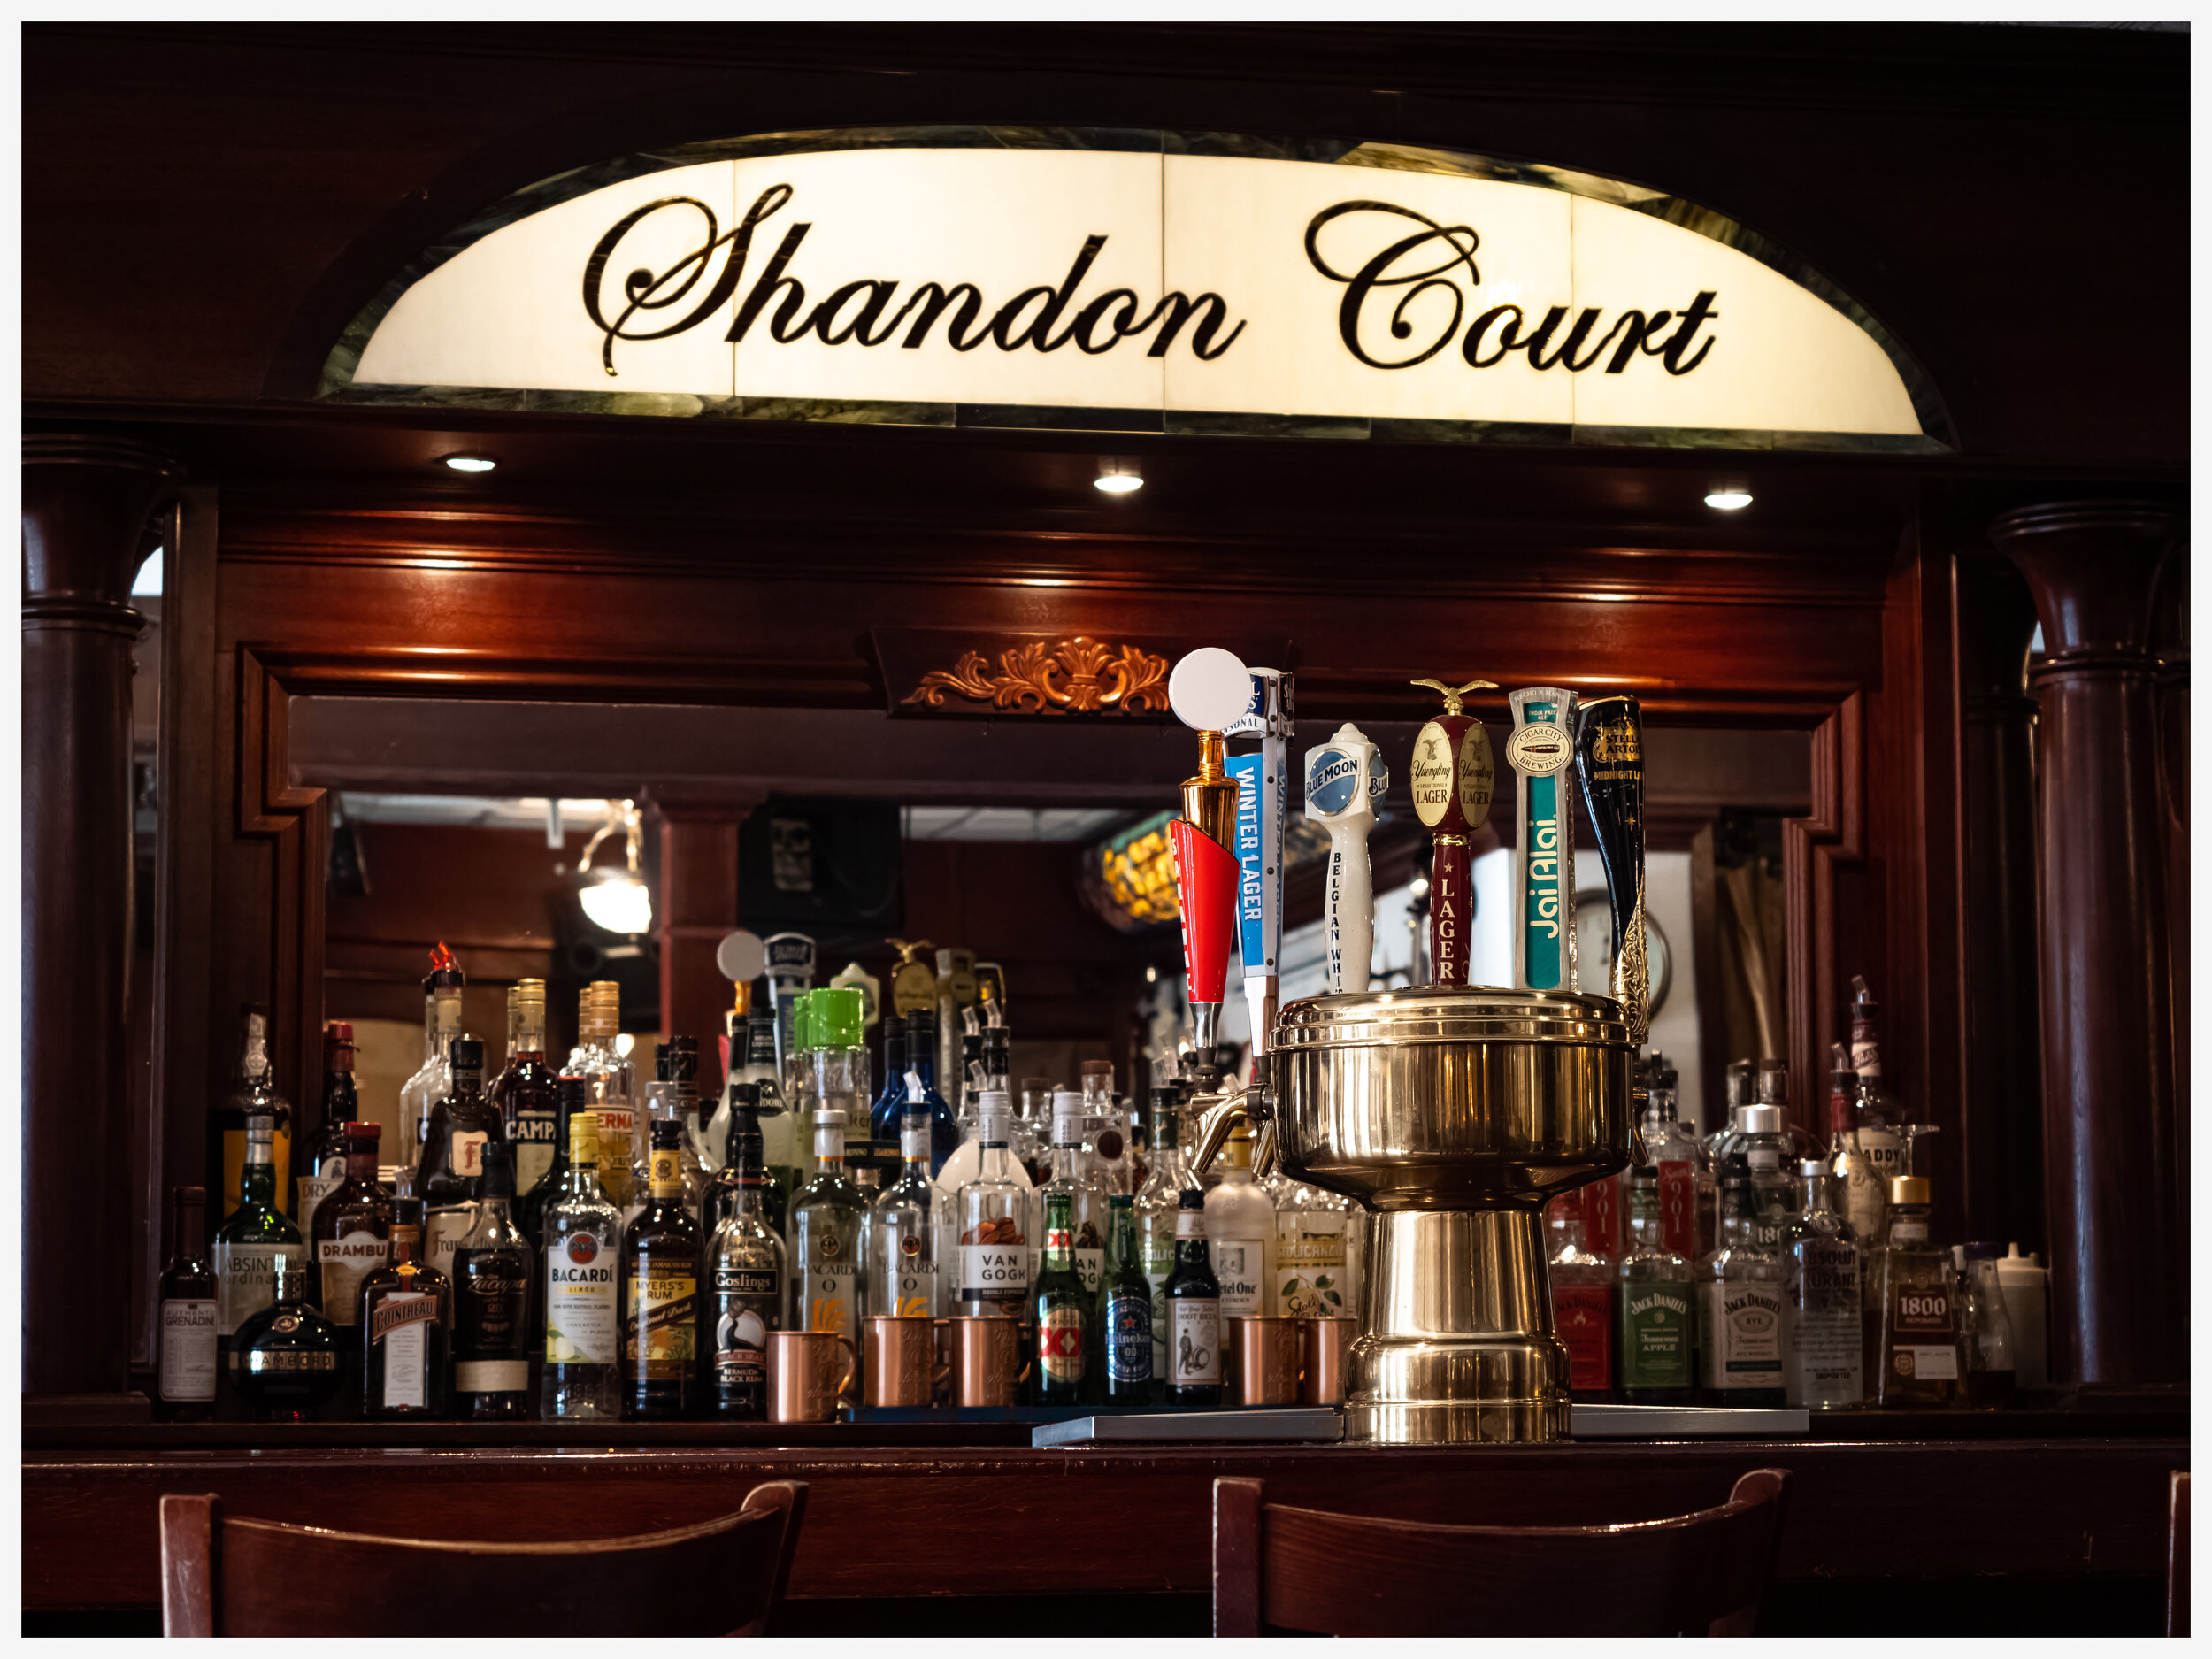 Full service bar Shandon Court